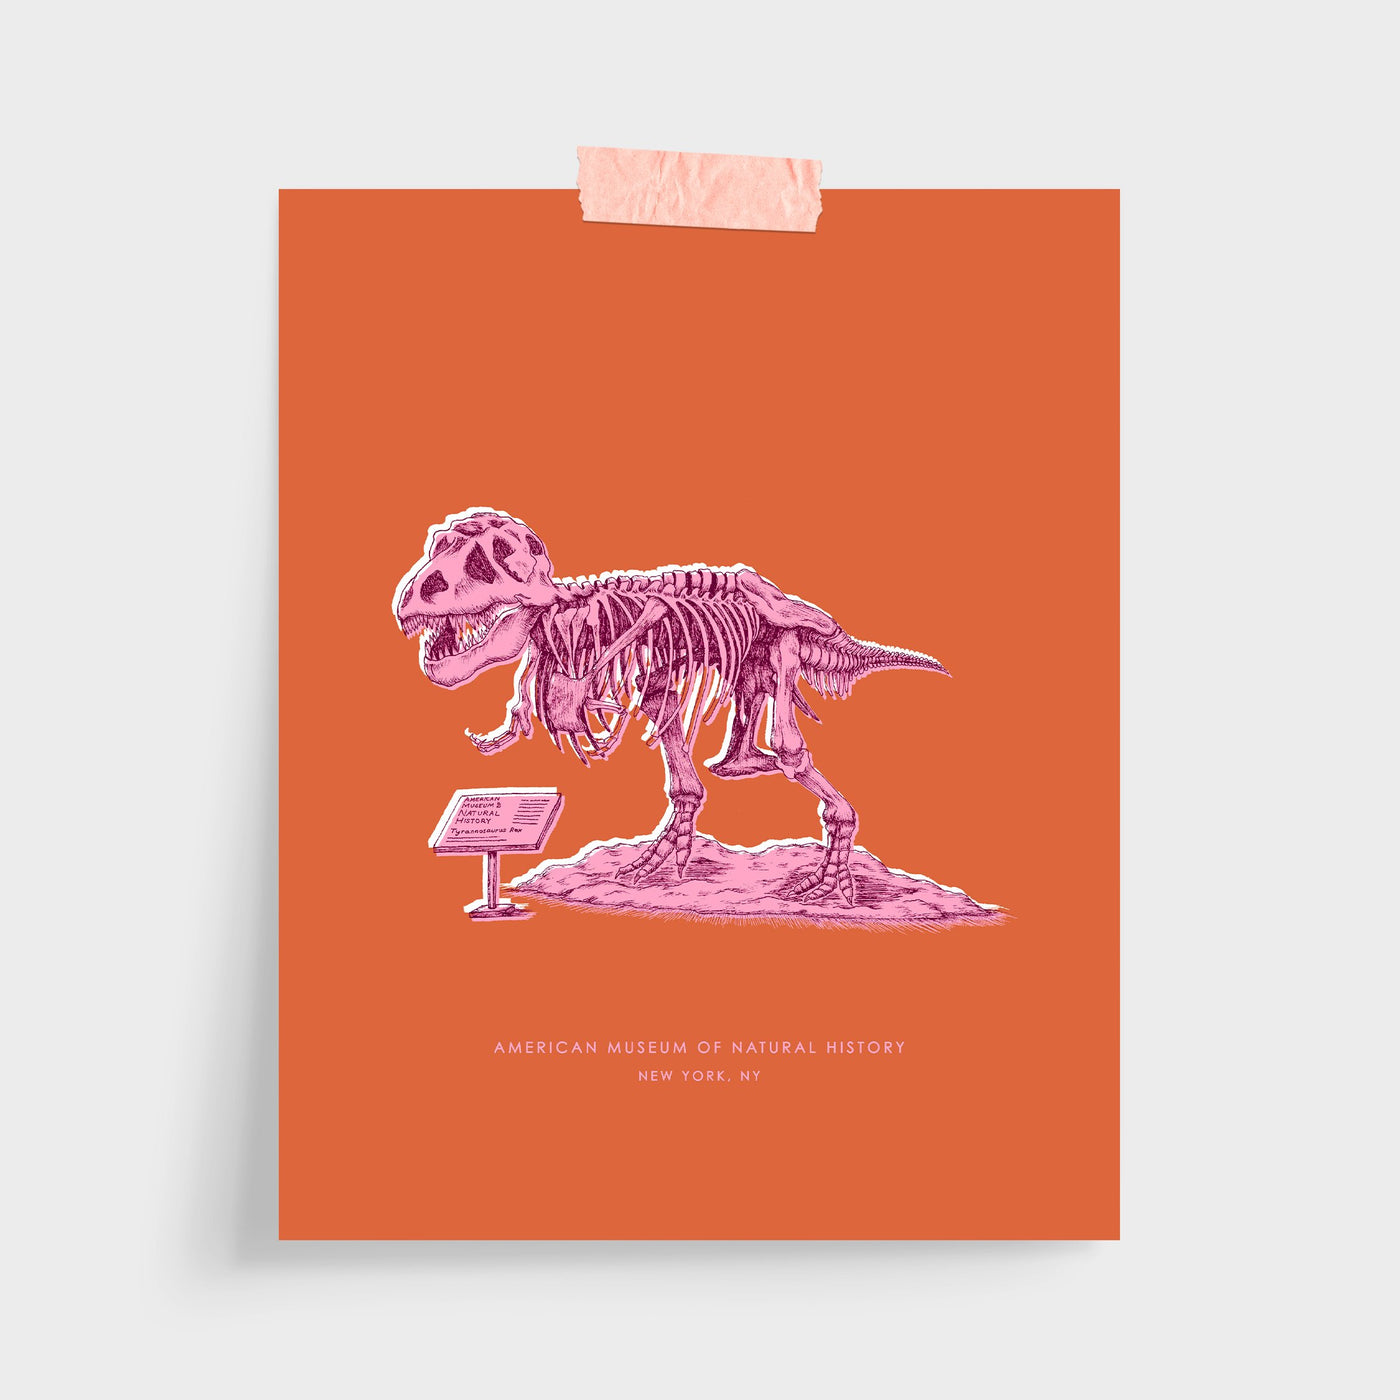 Gallery Prints Orange Print / 5x7 / Unframed New York Dinosaur Print Katie Kime